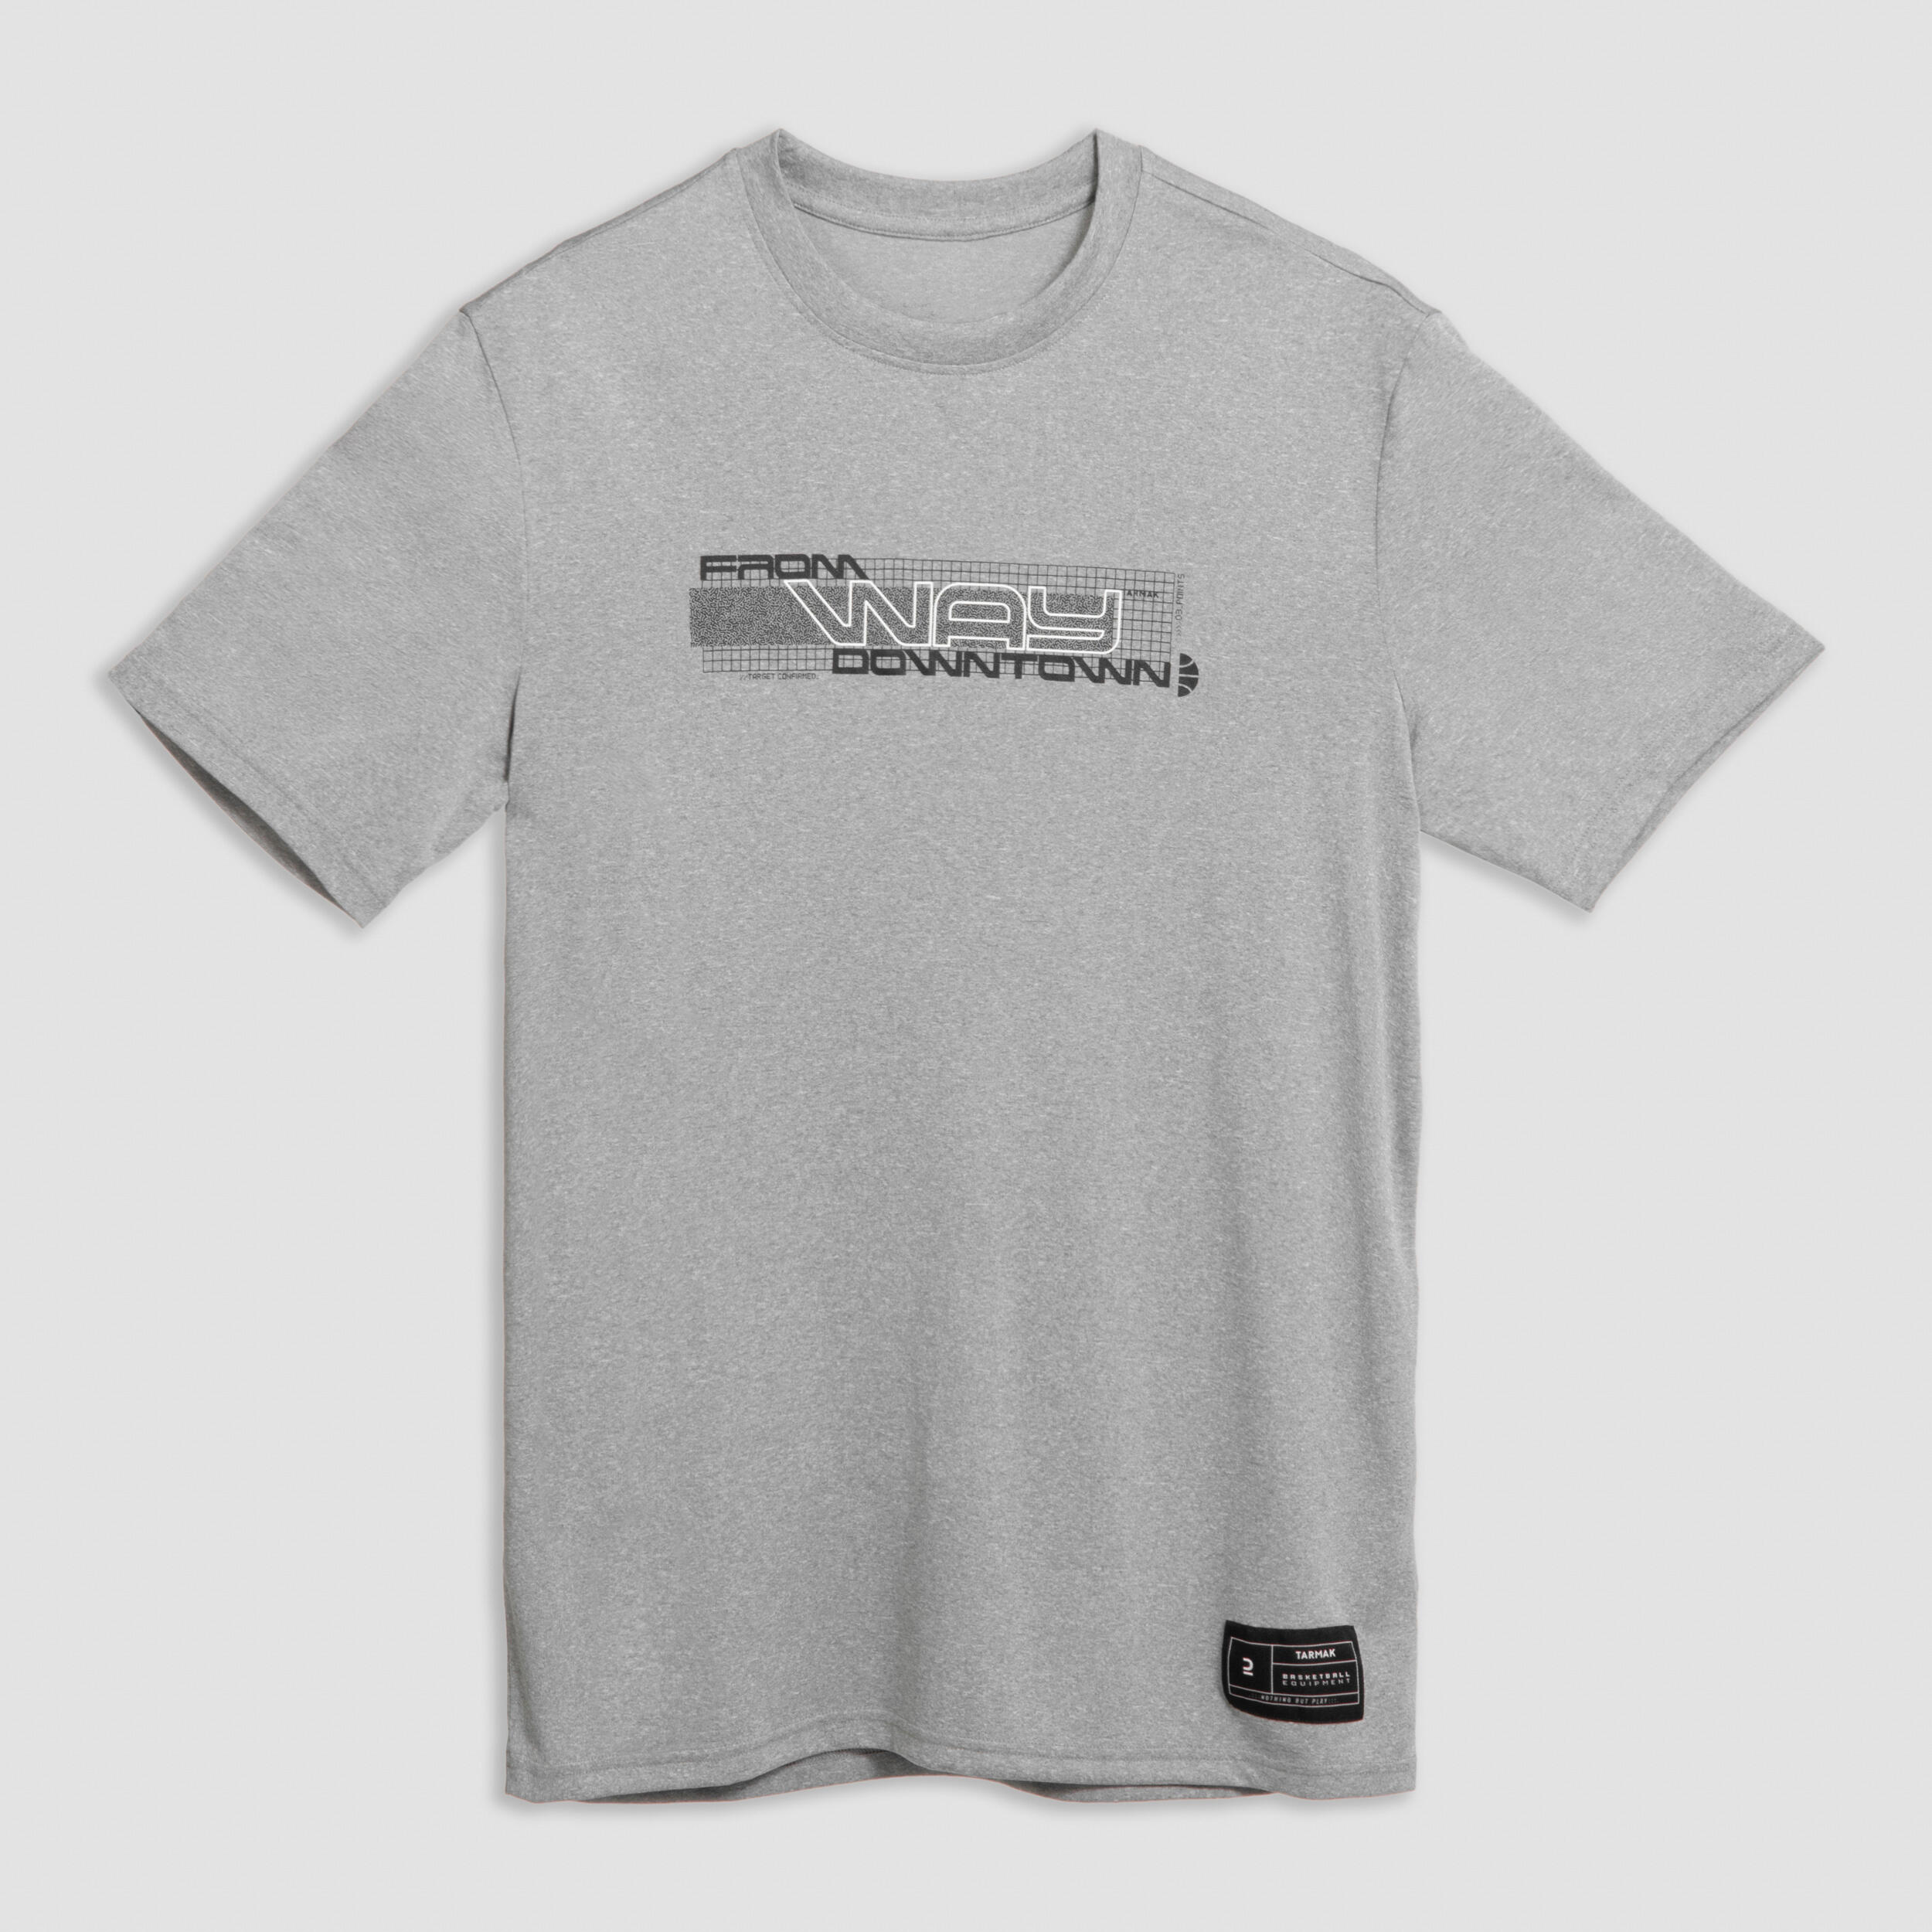 Men's/Women's Basketball T-Shirt/Jersey TS500 Fast - Grey 6/8